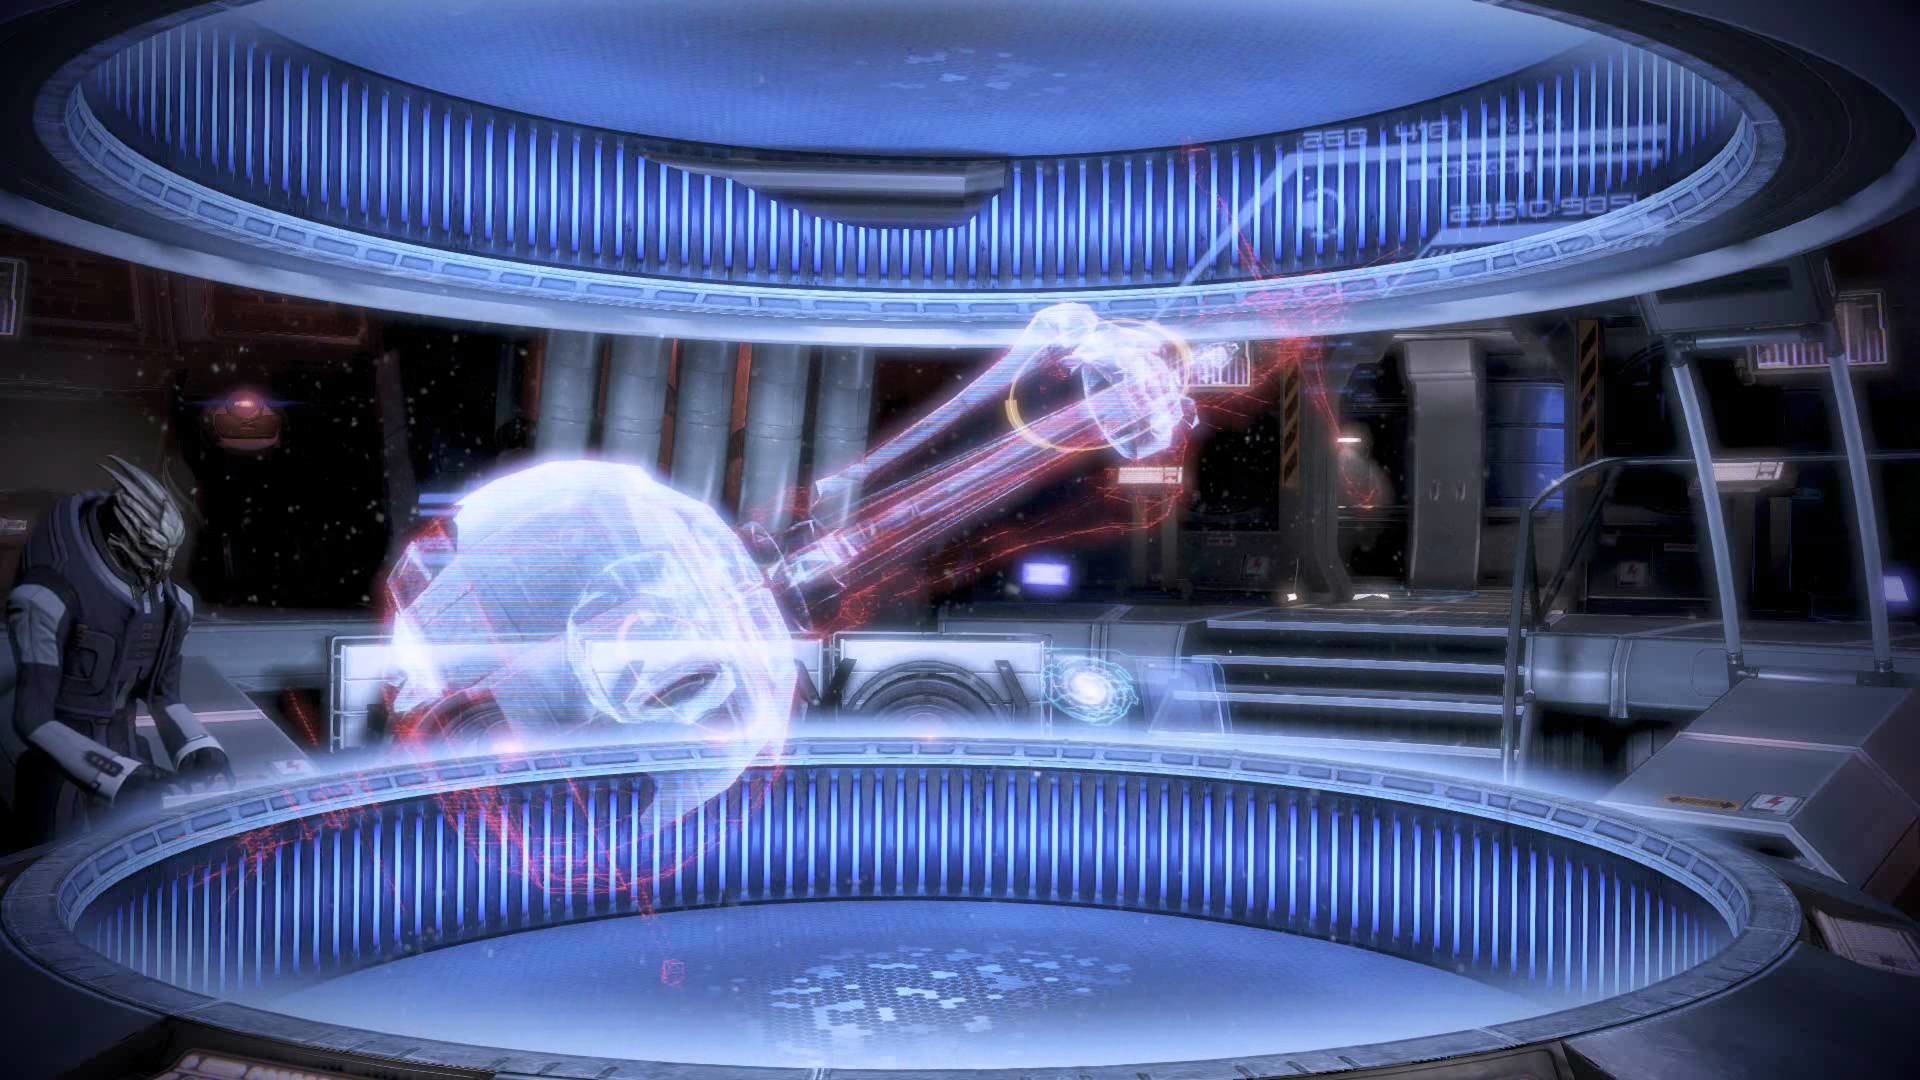 1920x1080 Mass Effect 3 The Crucible Hologram Dreamscene Video Wallpaper